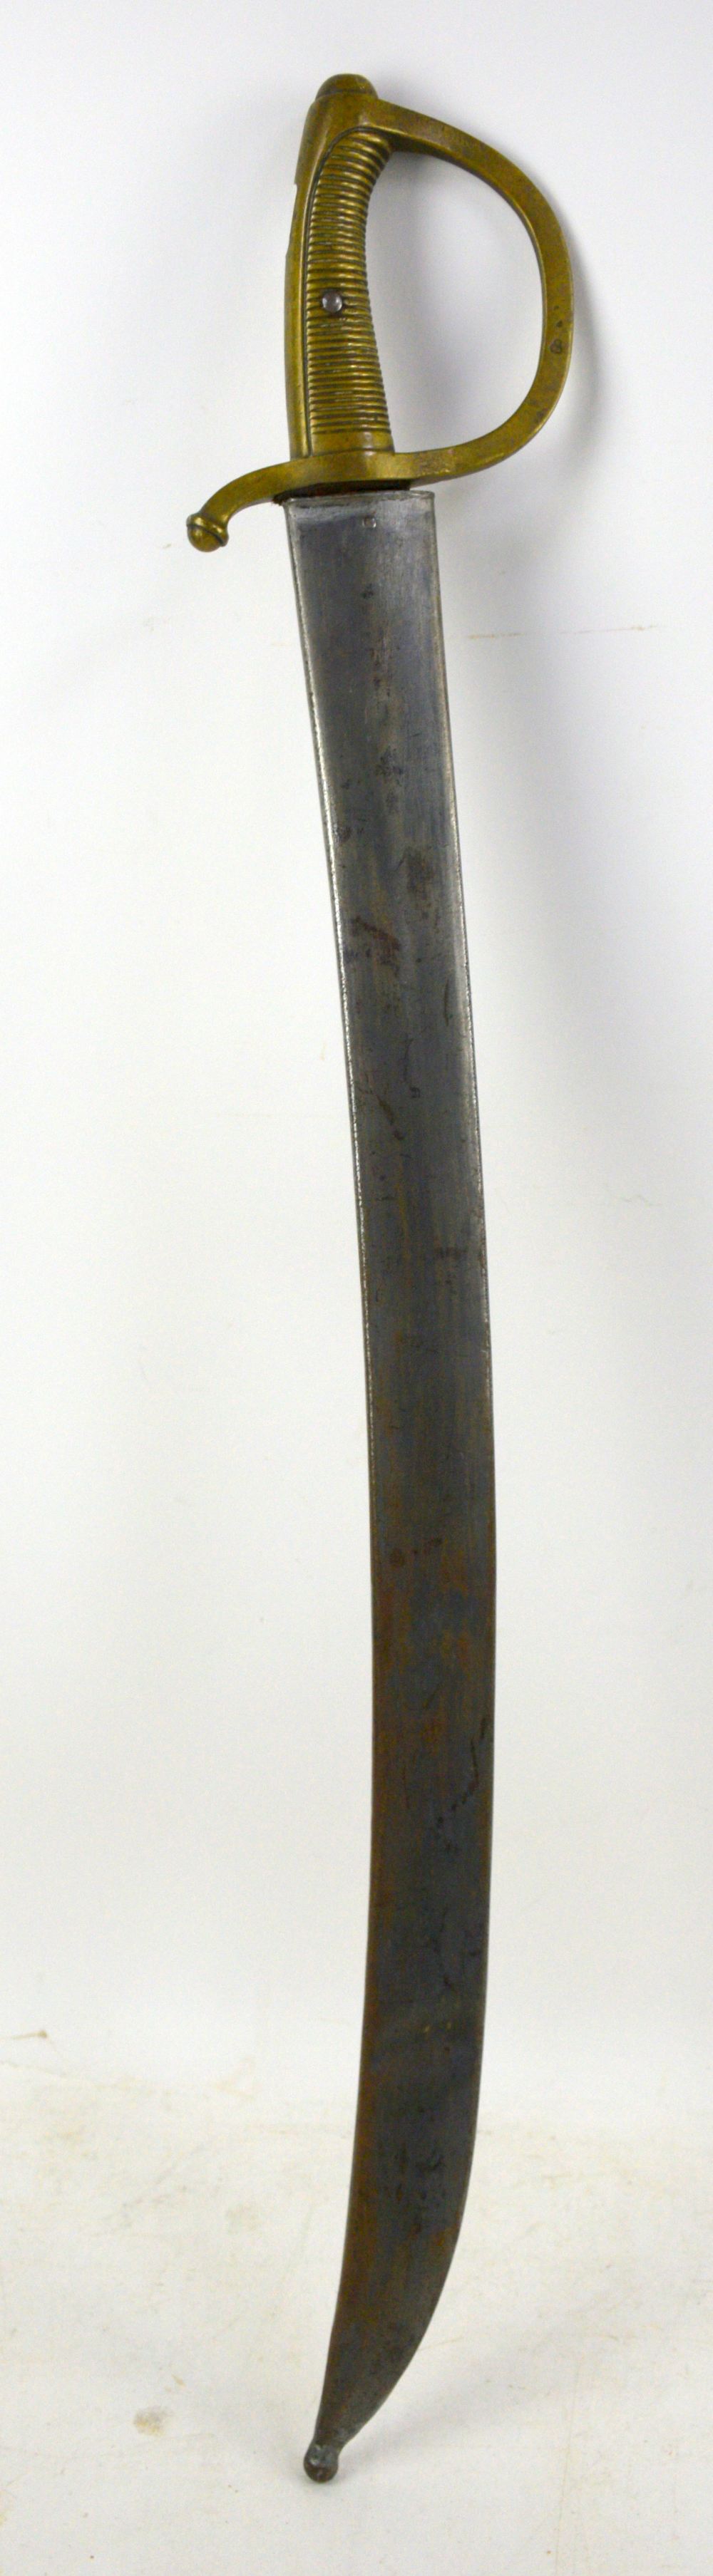 19th century Spanish Sword with brass handle in metal sheath 75 cm